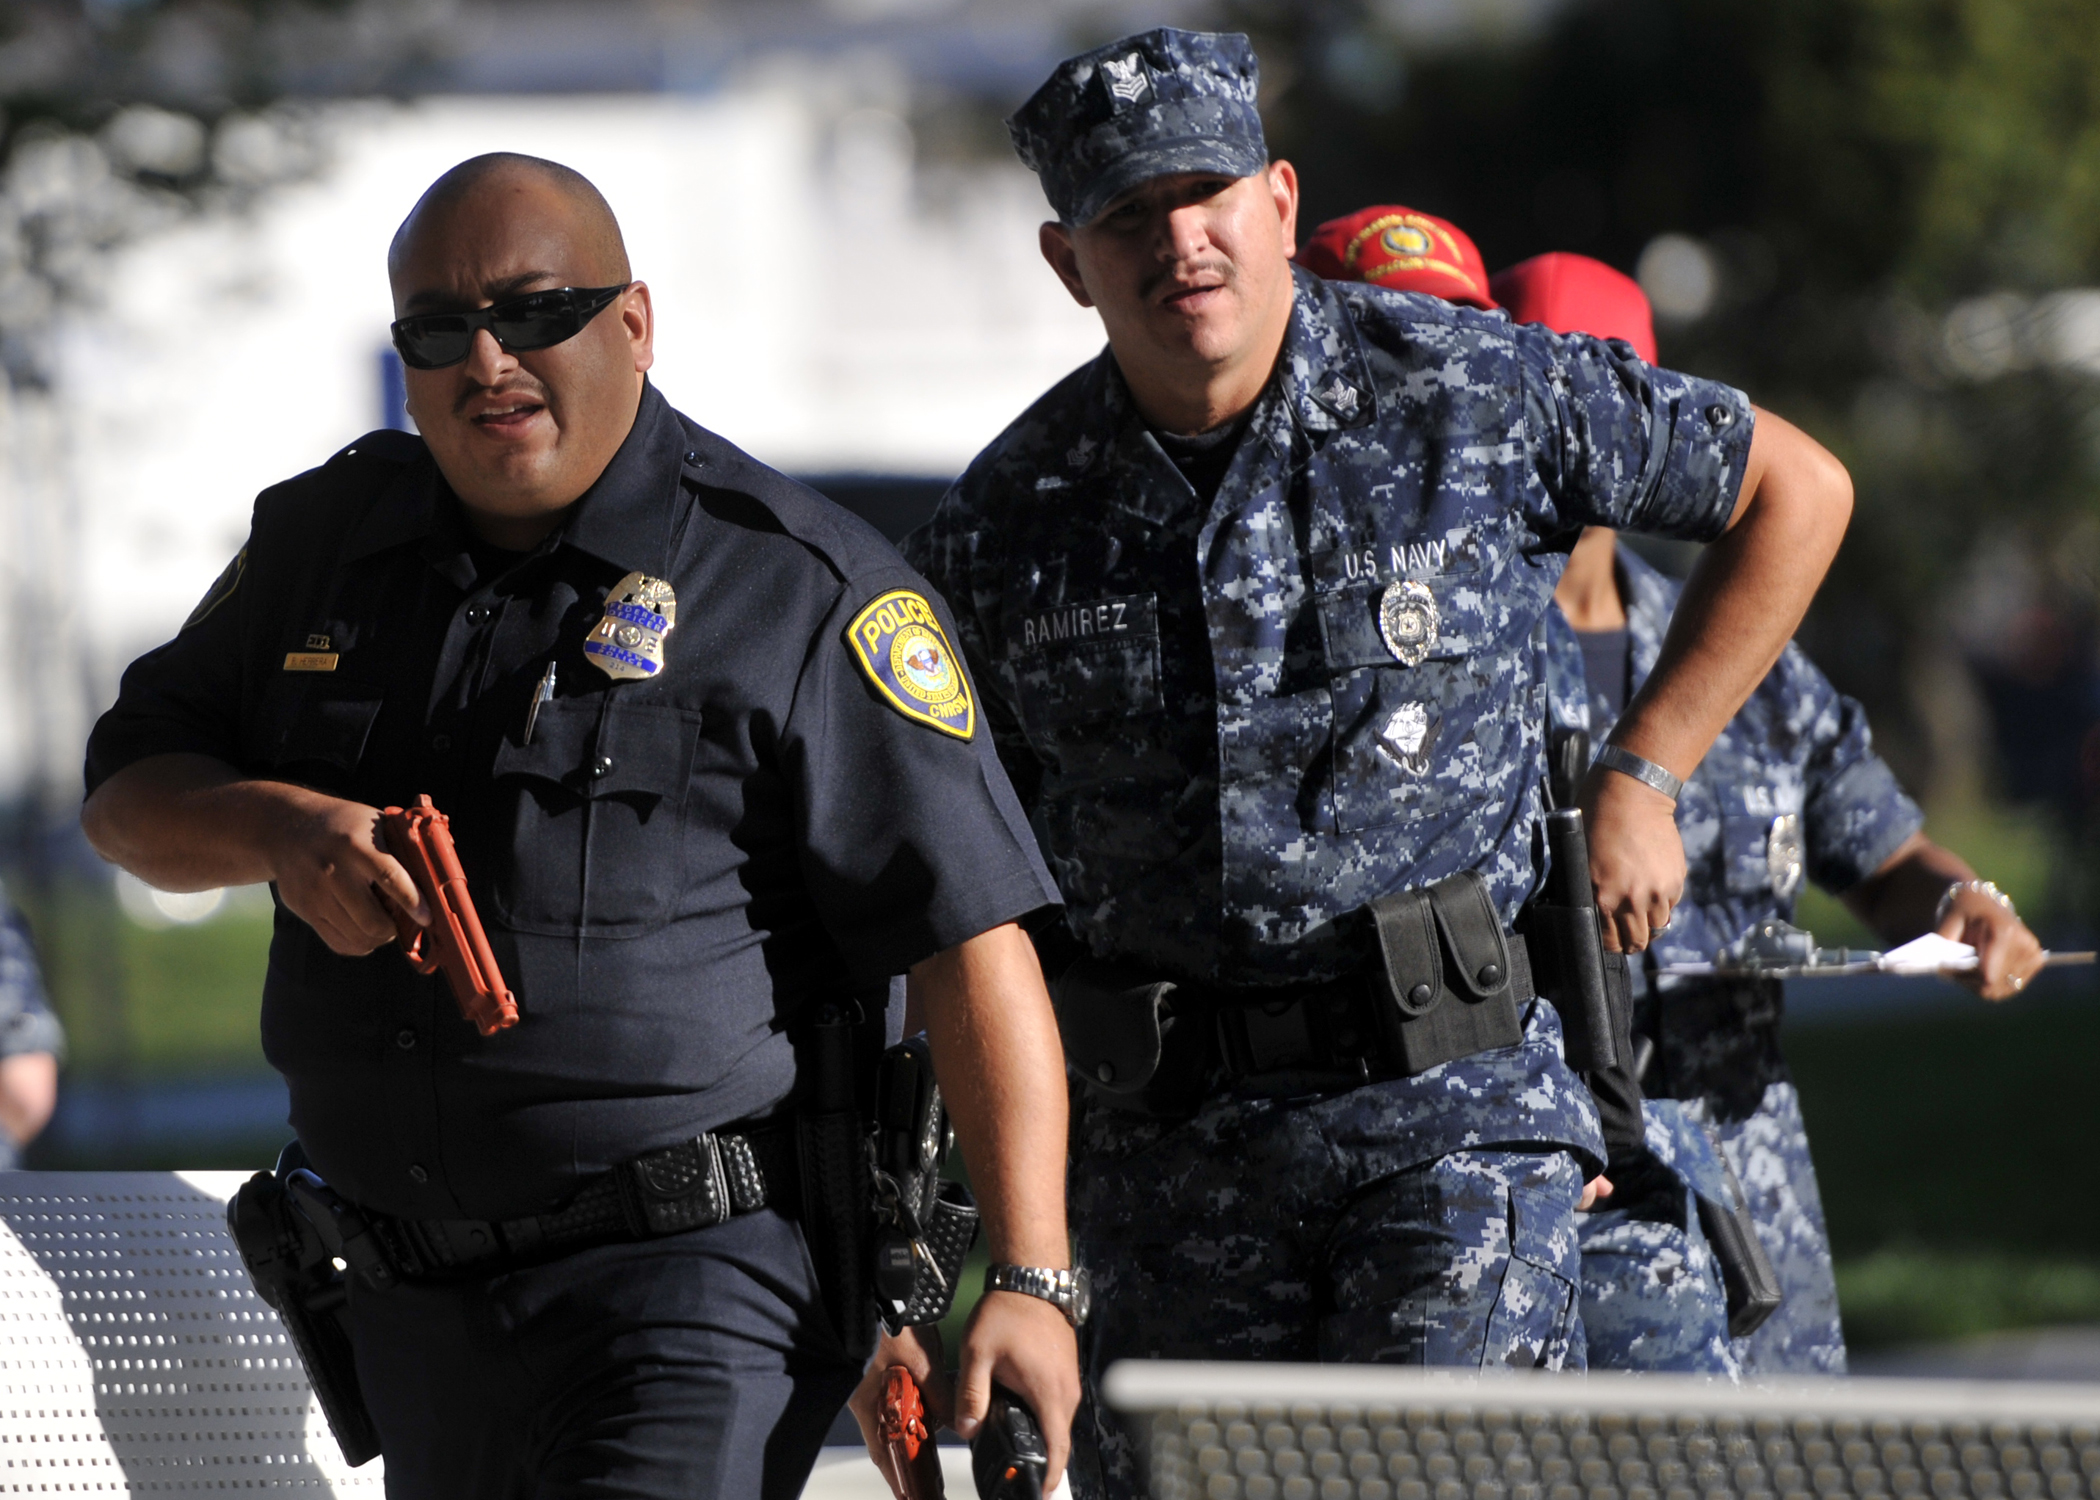 U.S. Navy does not rule out punishing captain who criticized coronavirus response